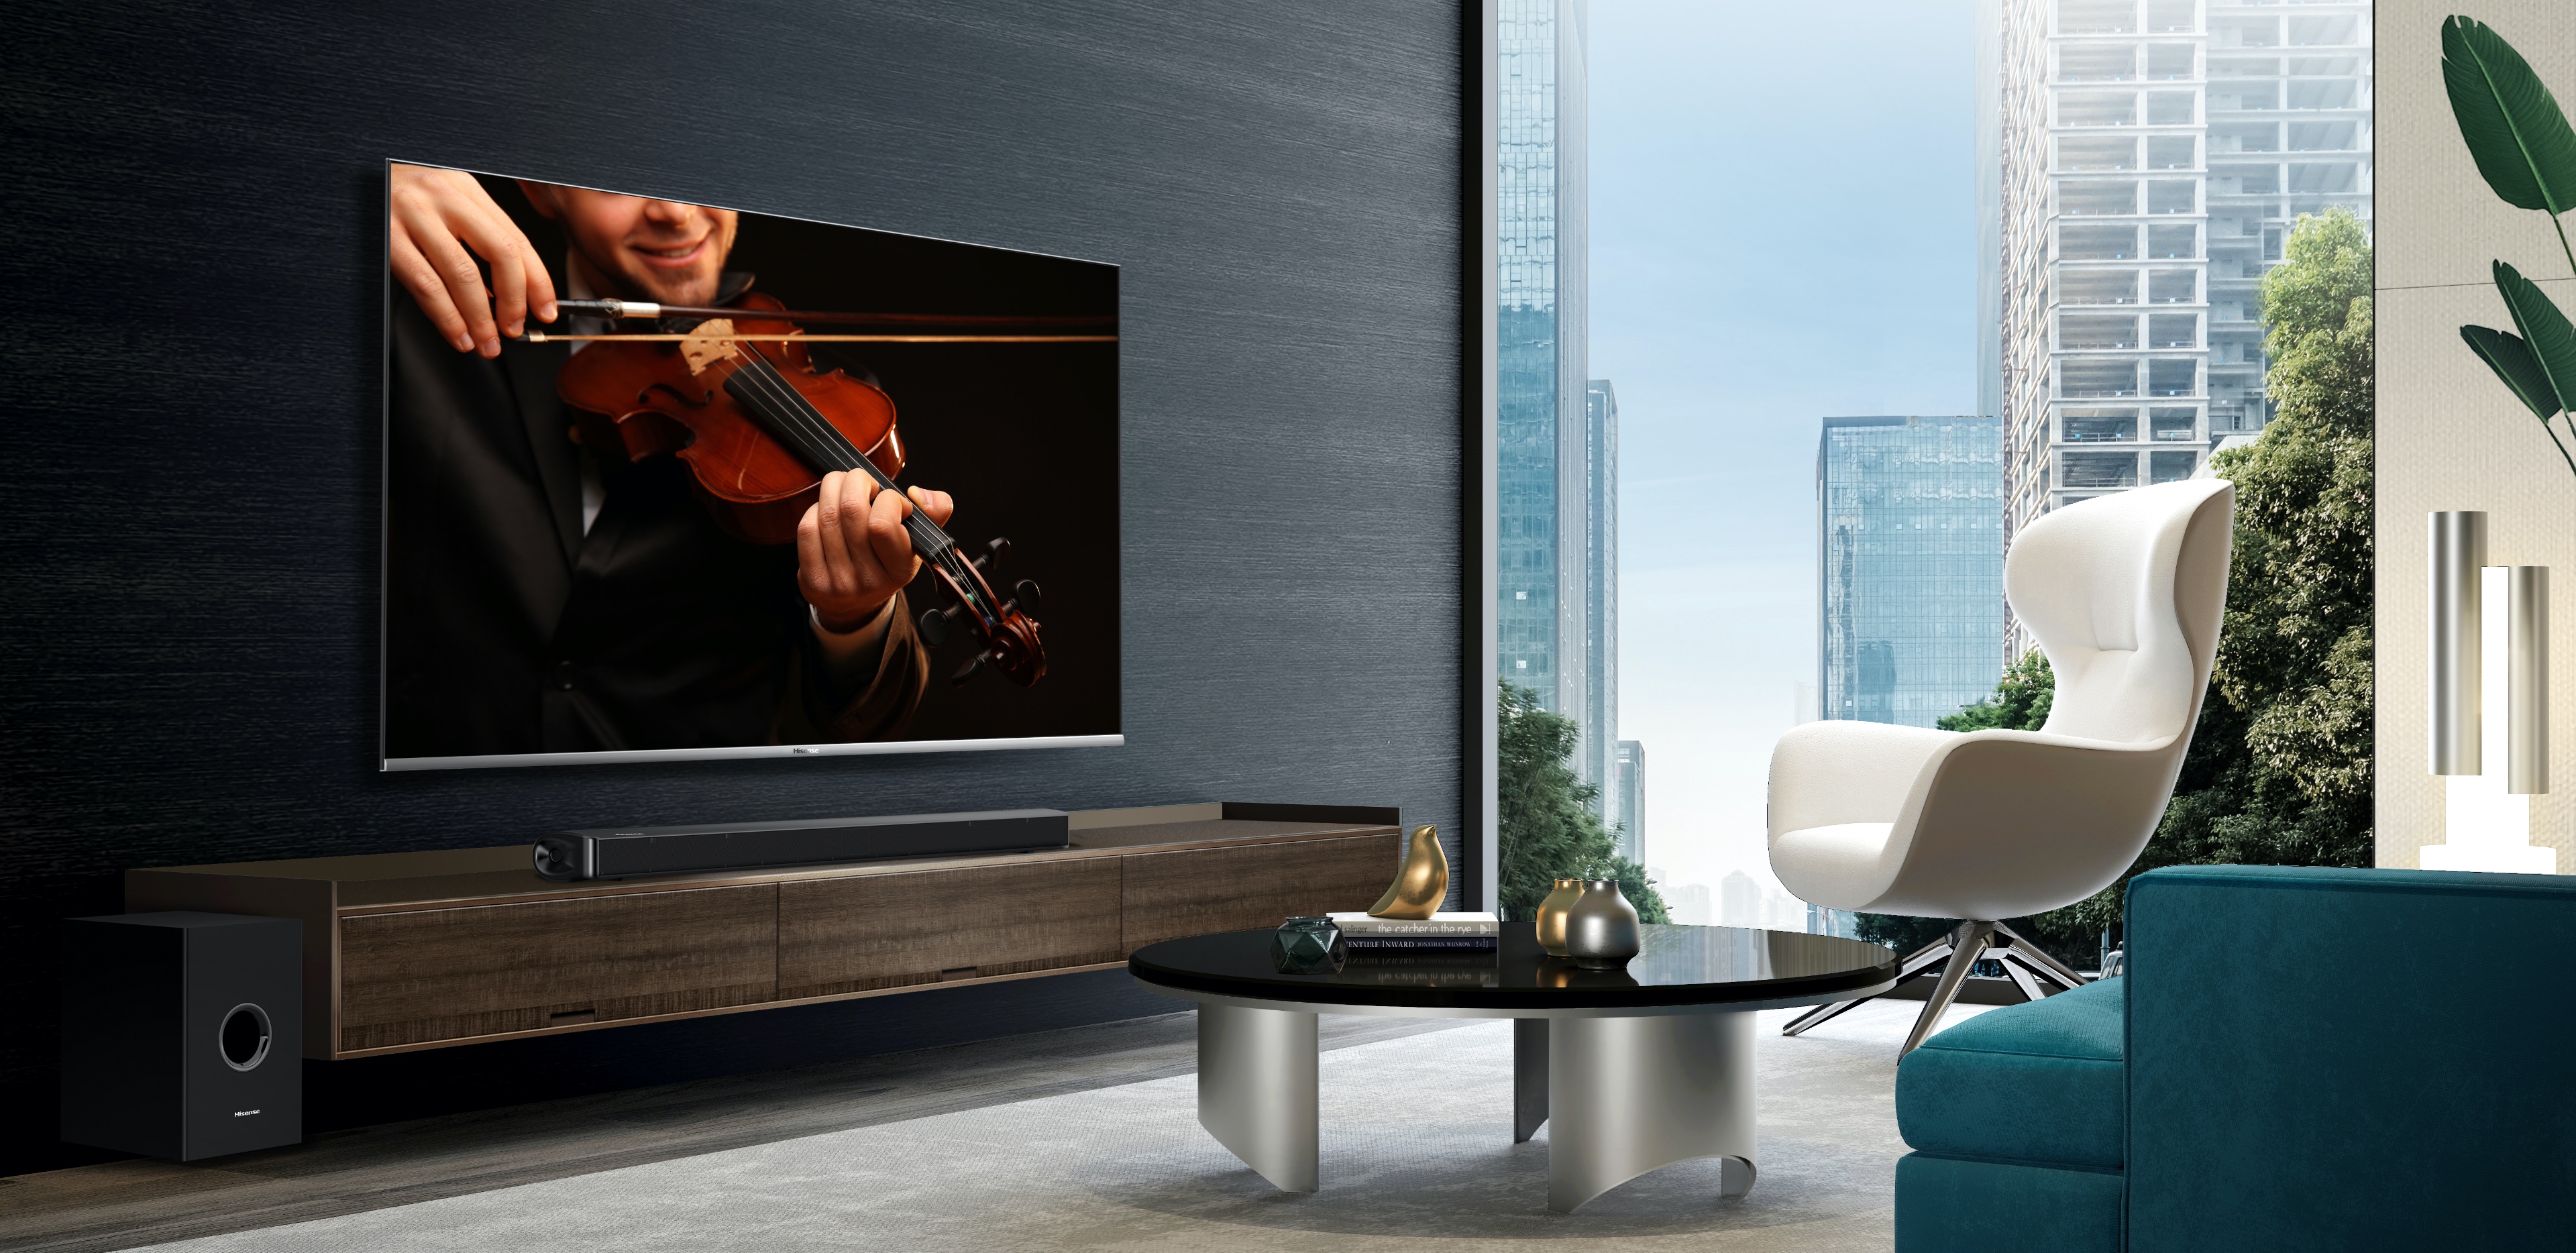 Hisense Soundbar in a living room Lifestyle Image